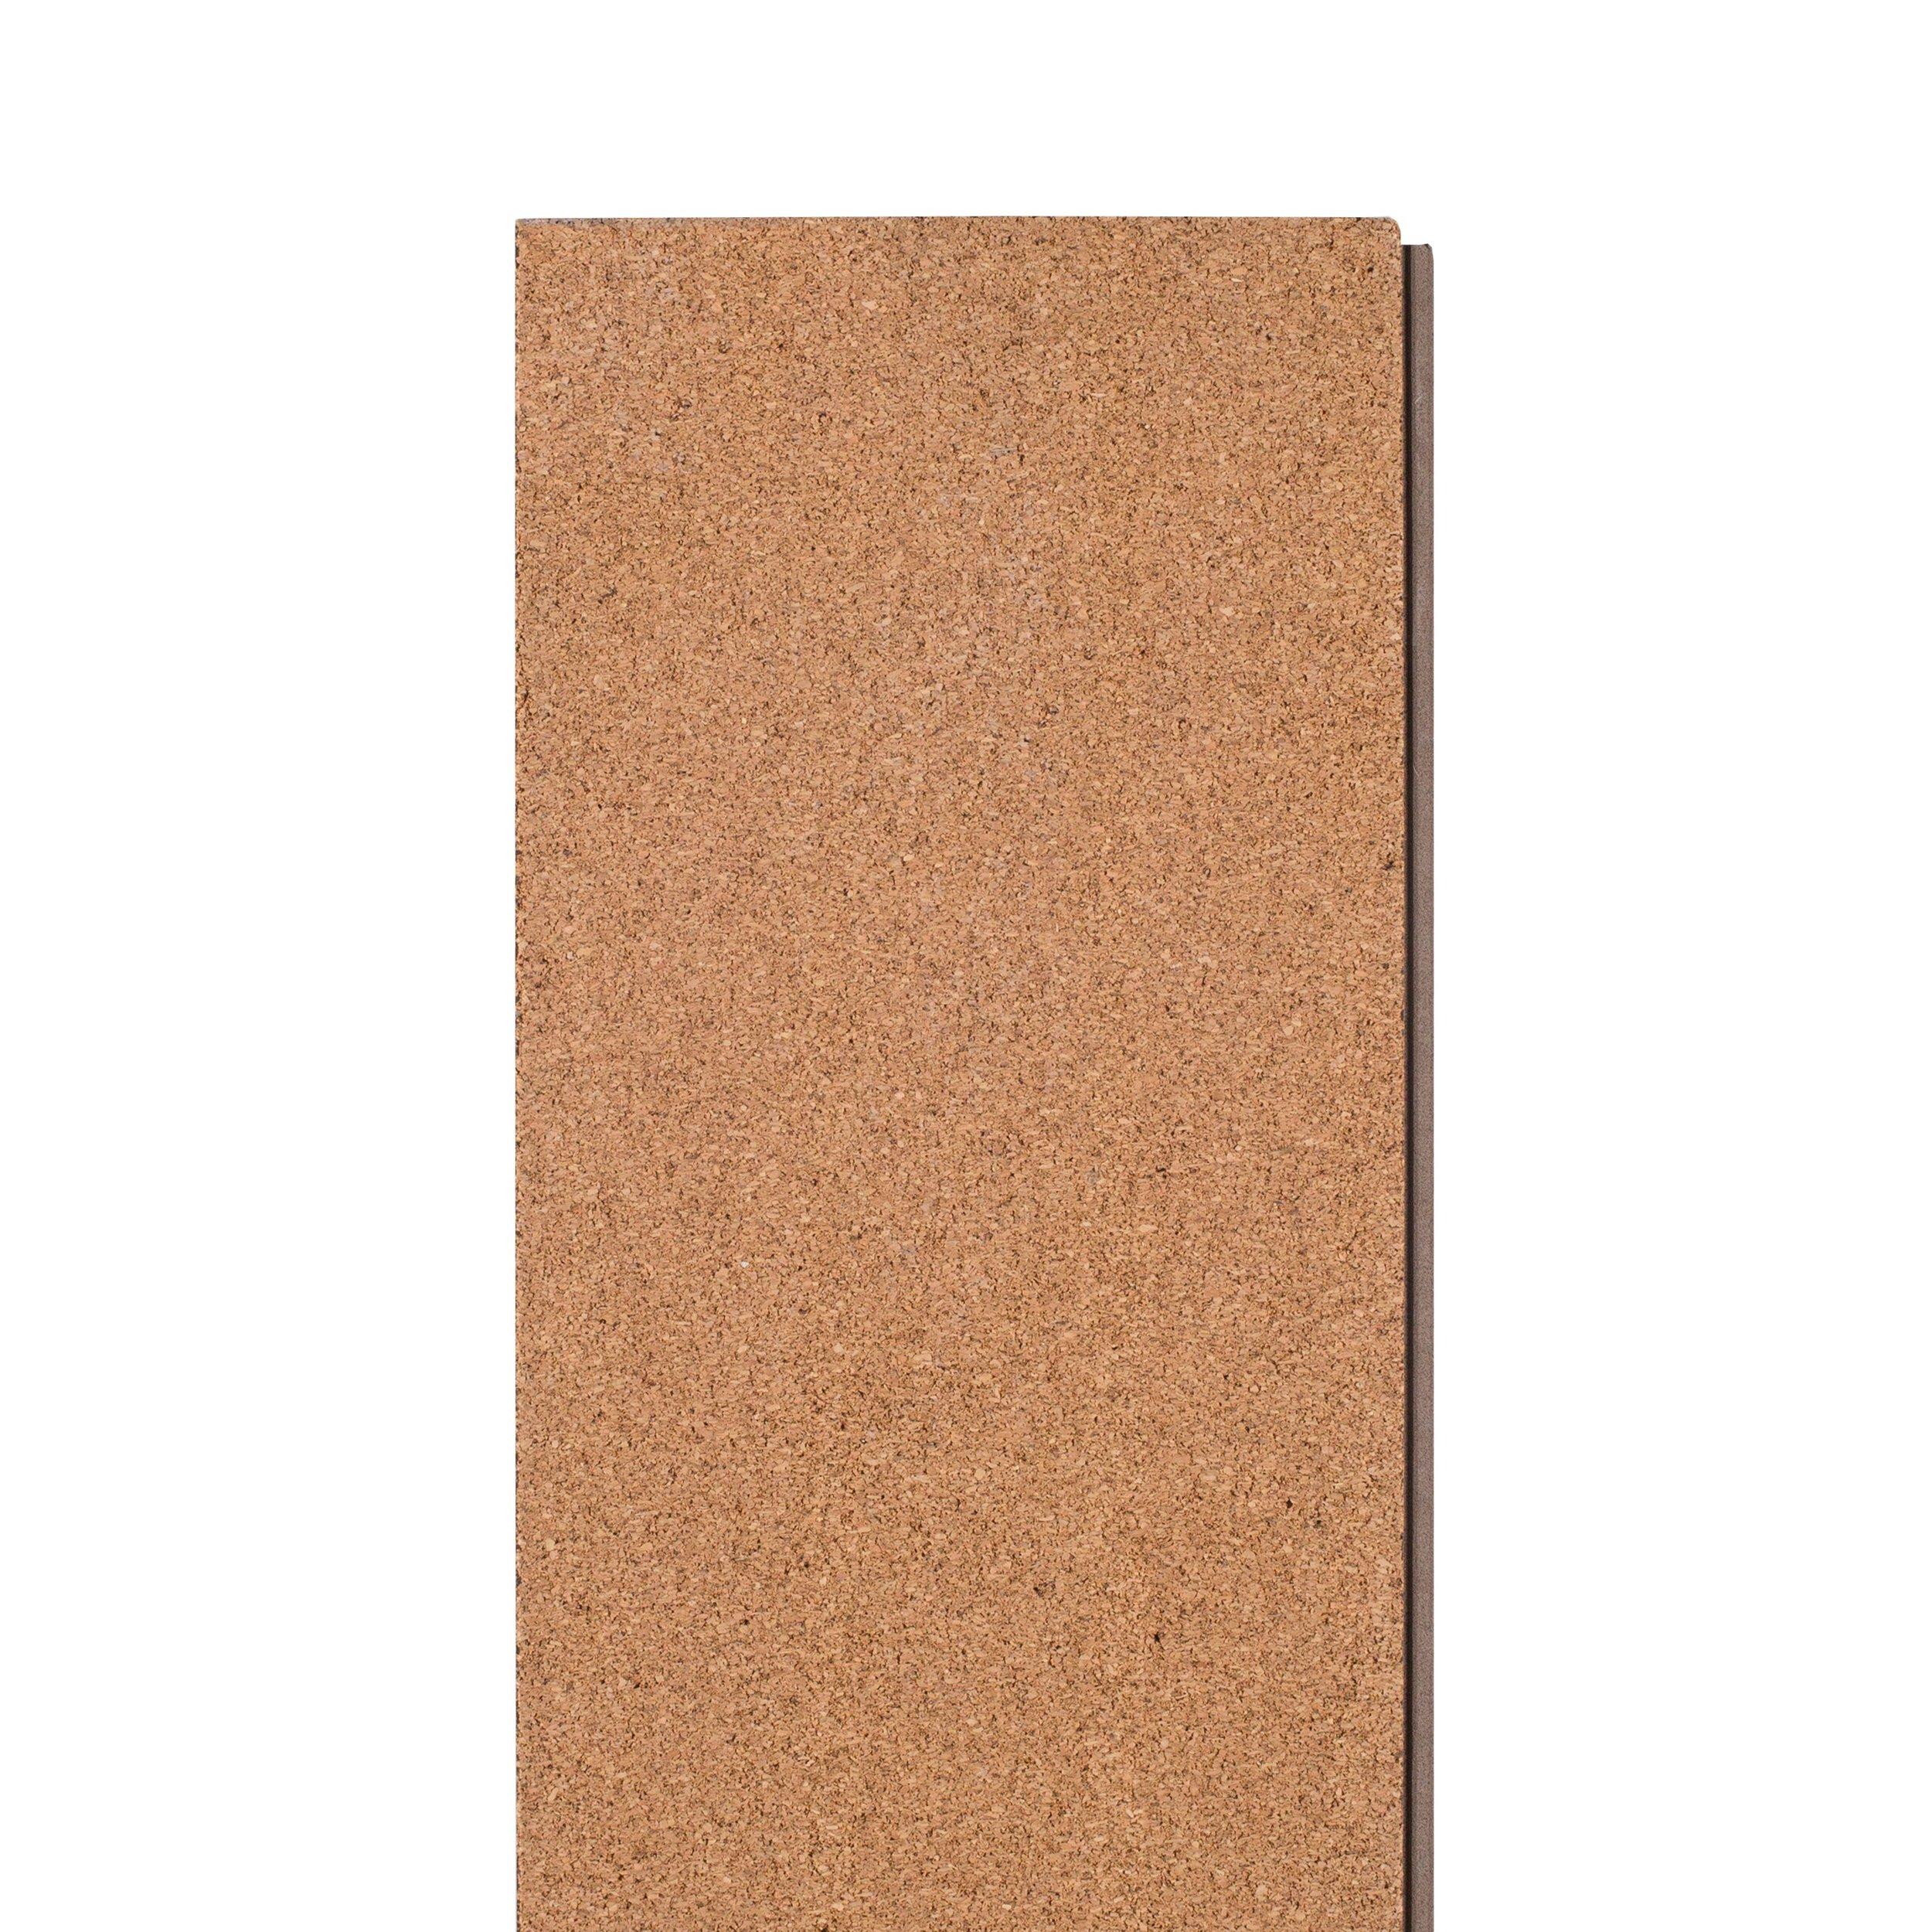 Lightest Gray Rigid Core Luxury Vinyl Plank - Cork Back